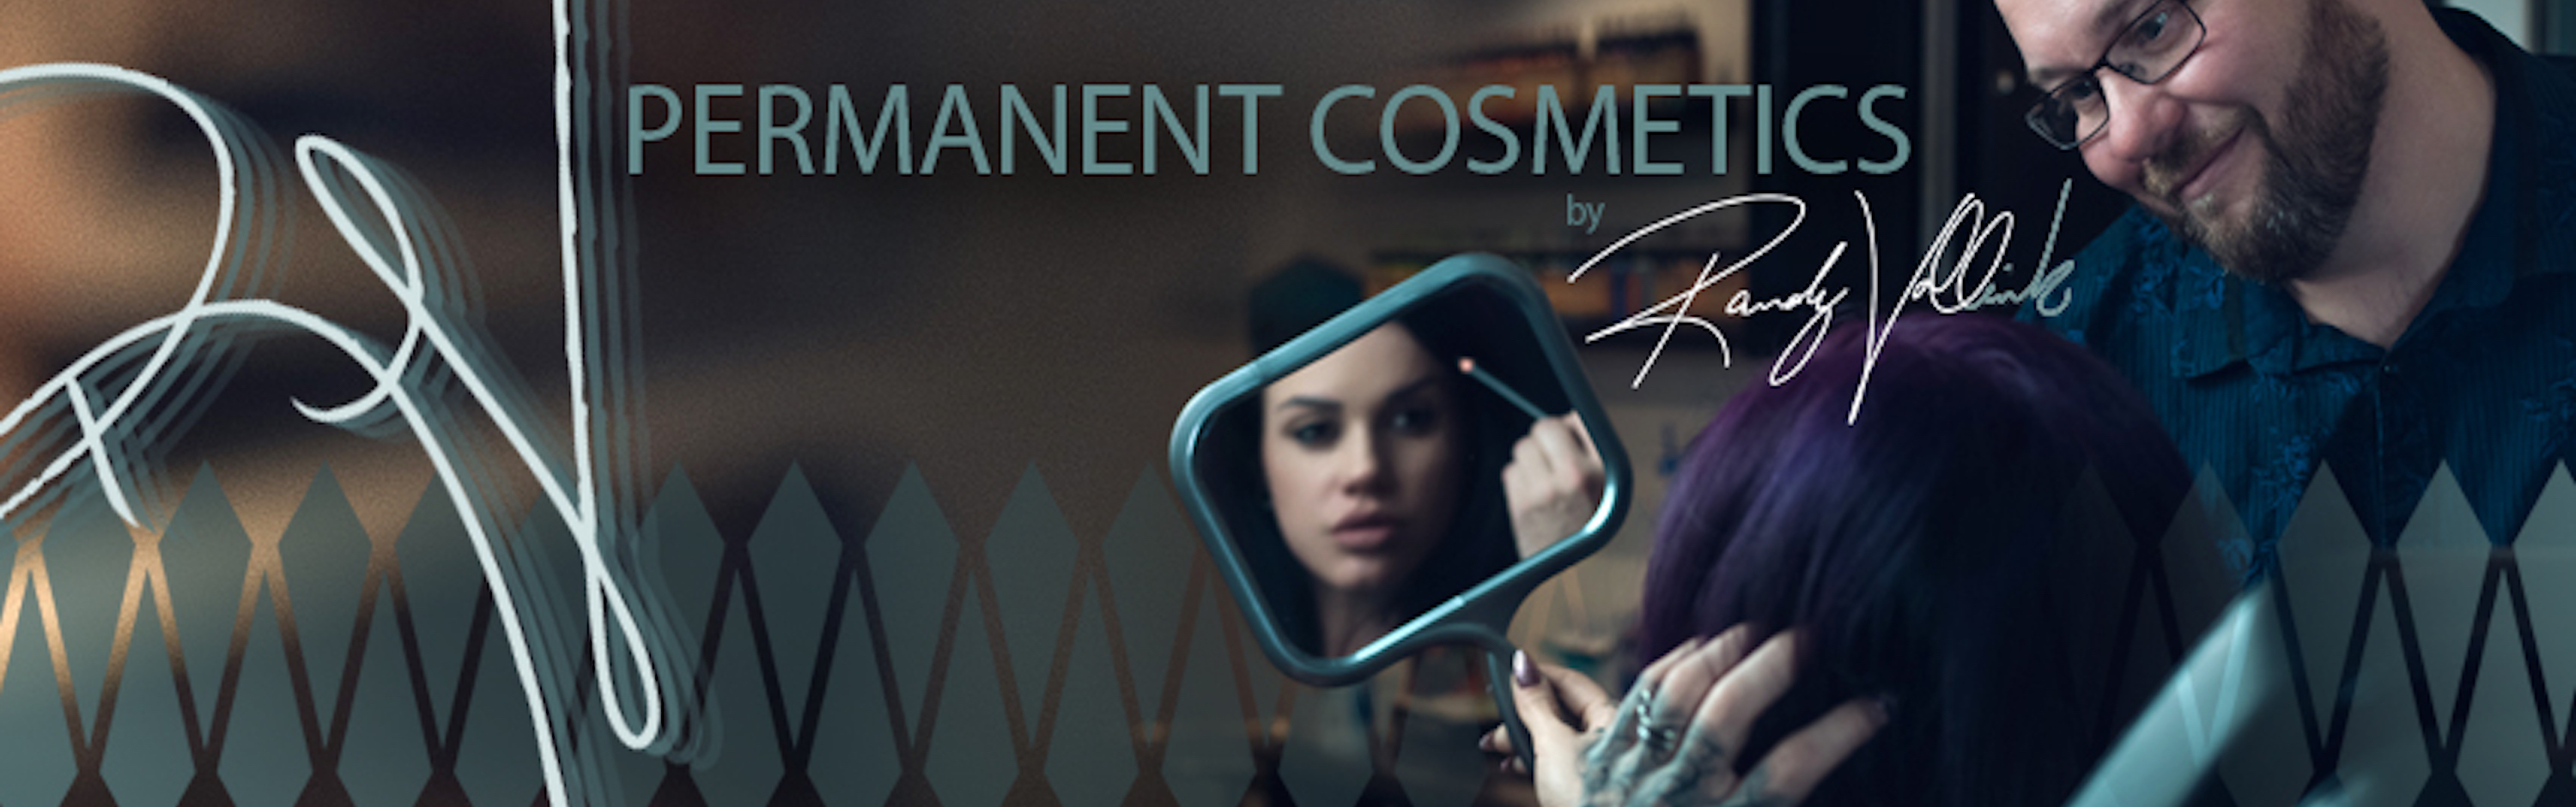 Permanent Cosmetics by Randy Vollink